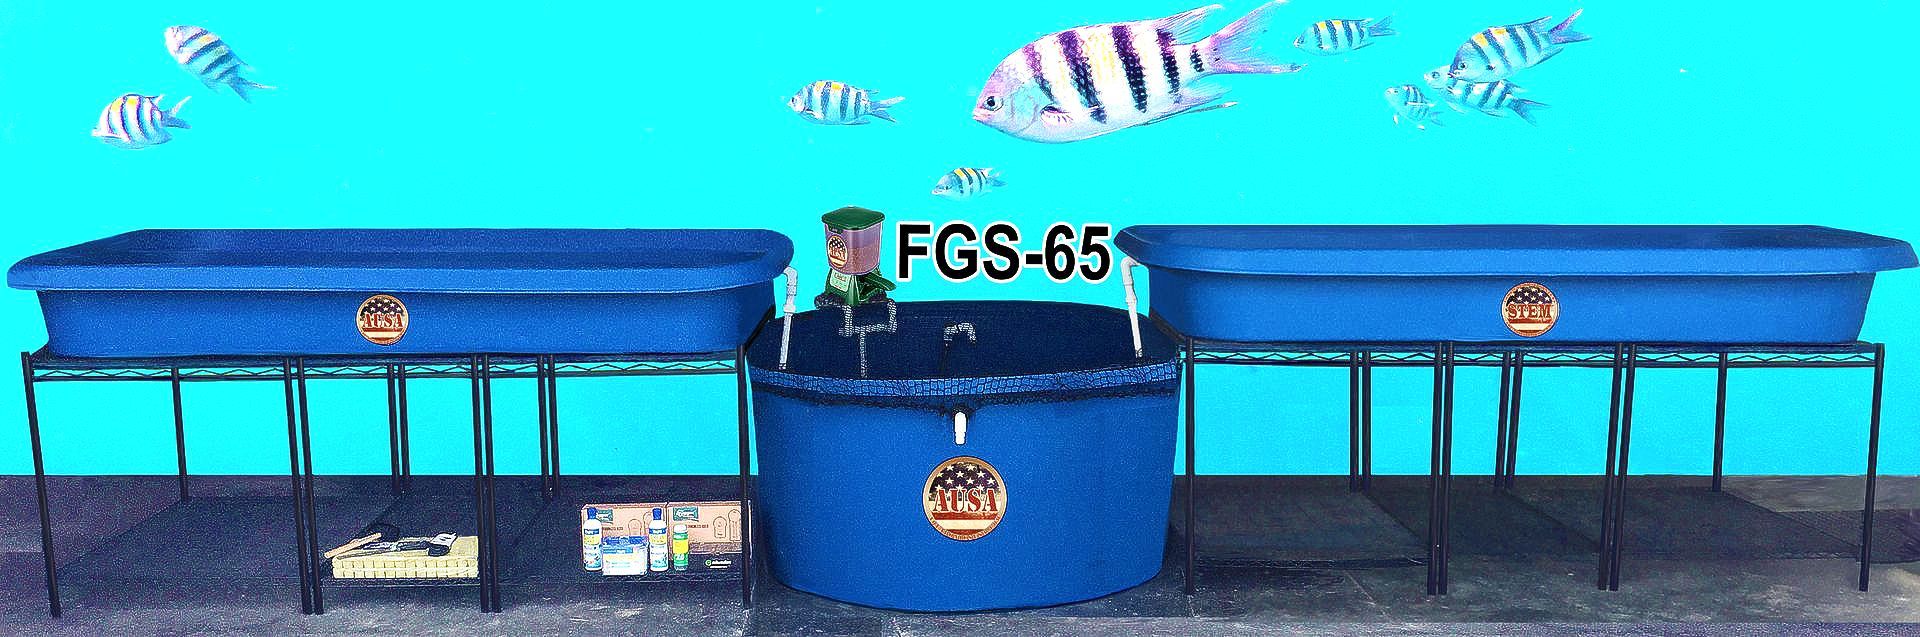 AquaponicsSystem, FGS-65